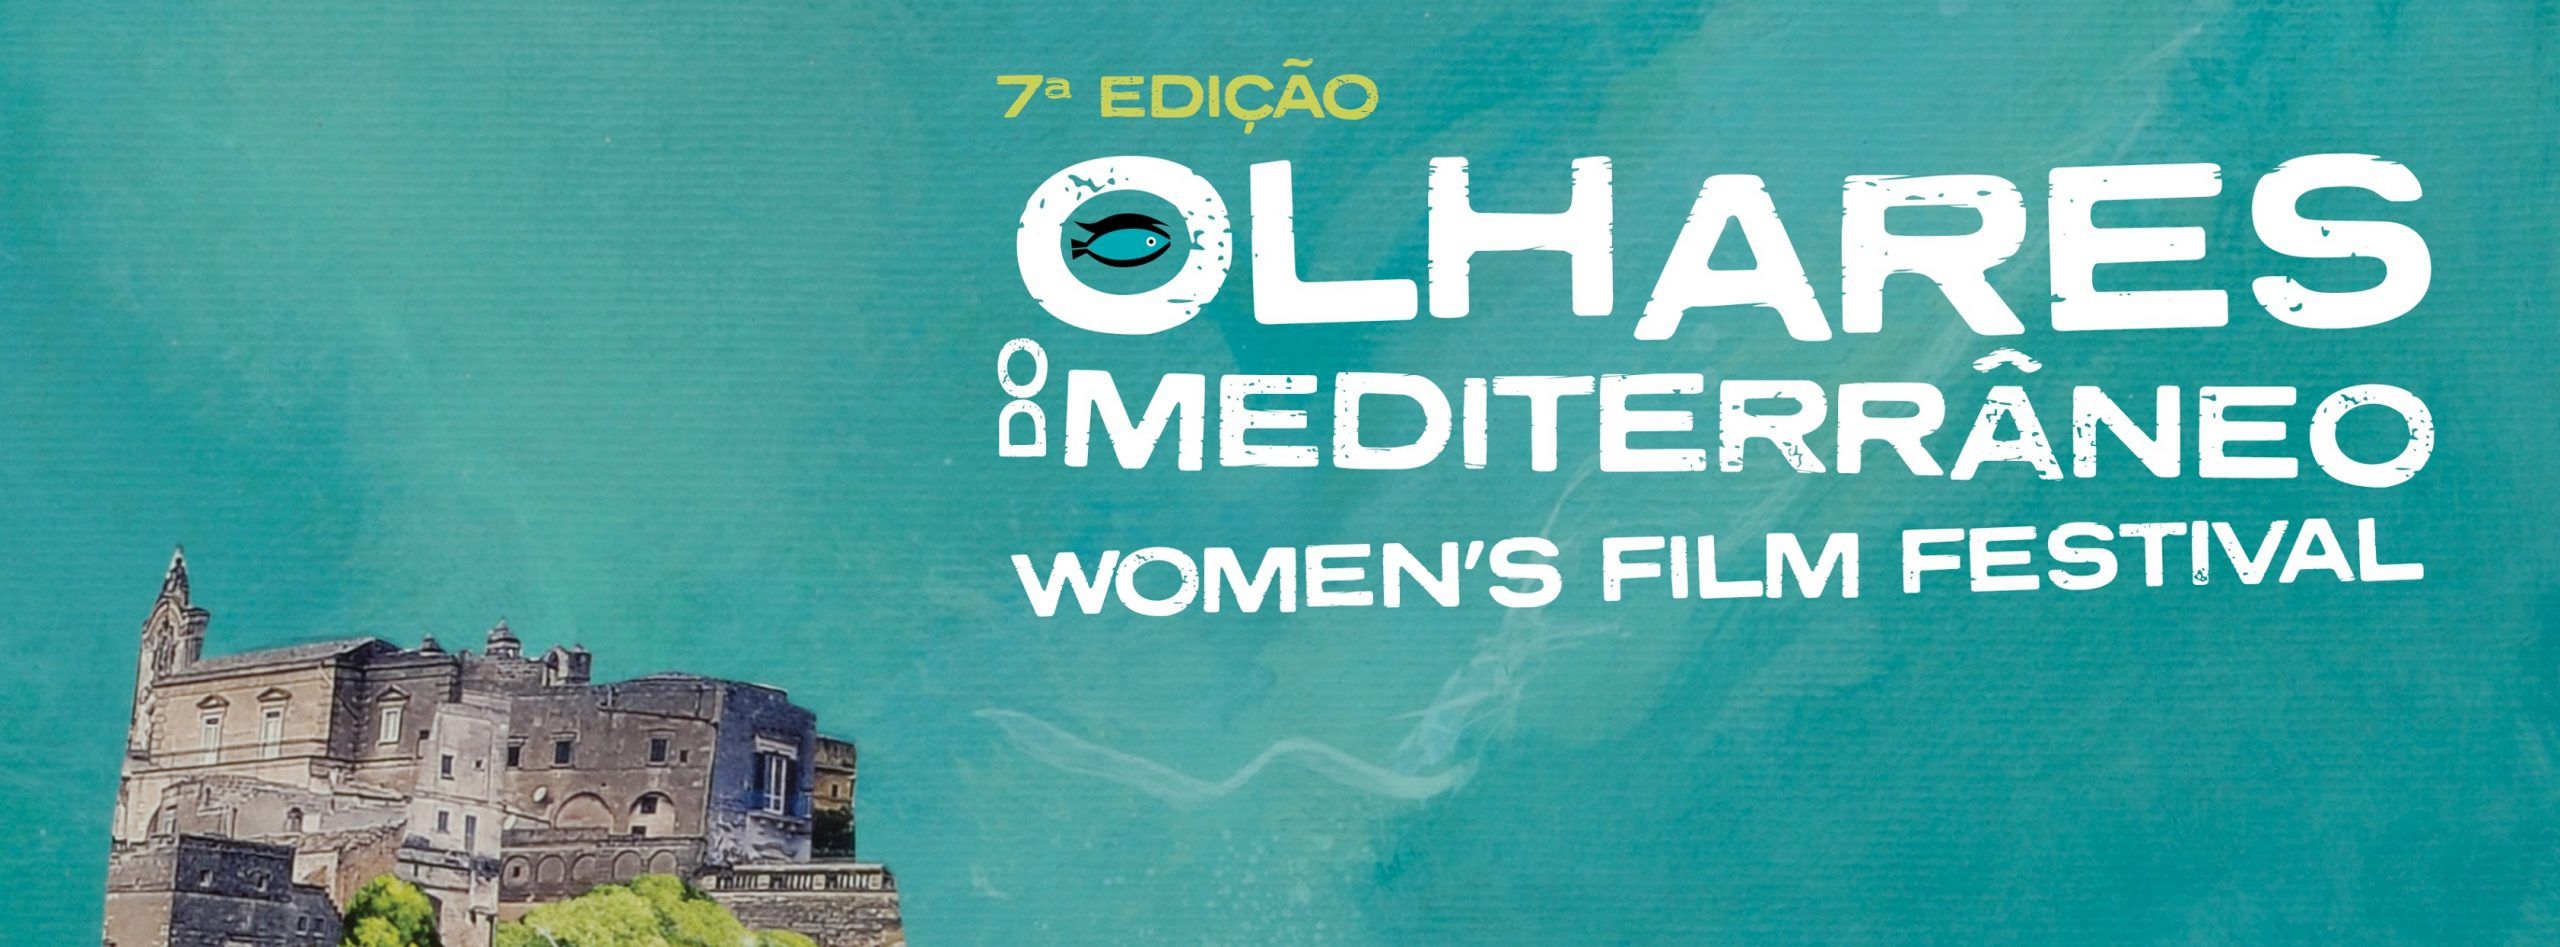 olhares-mediterraneo-festival-2020-1